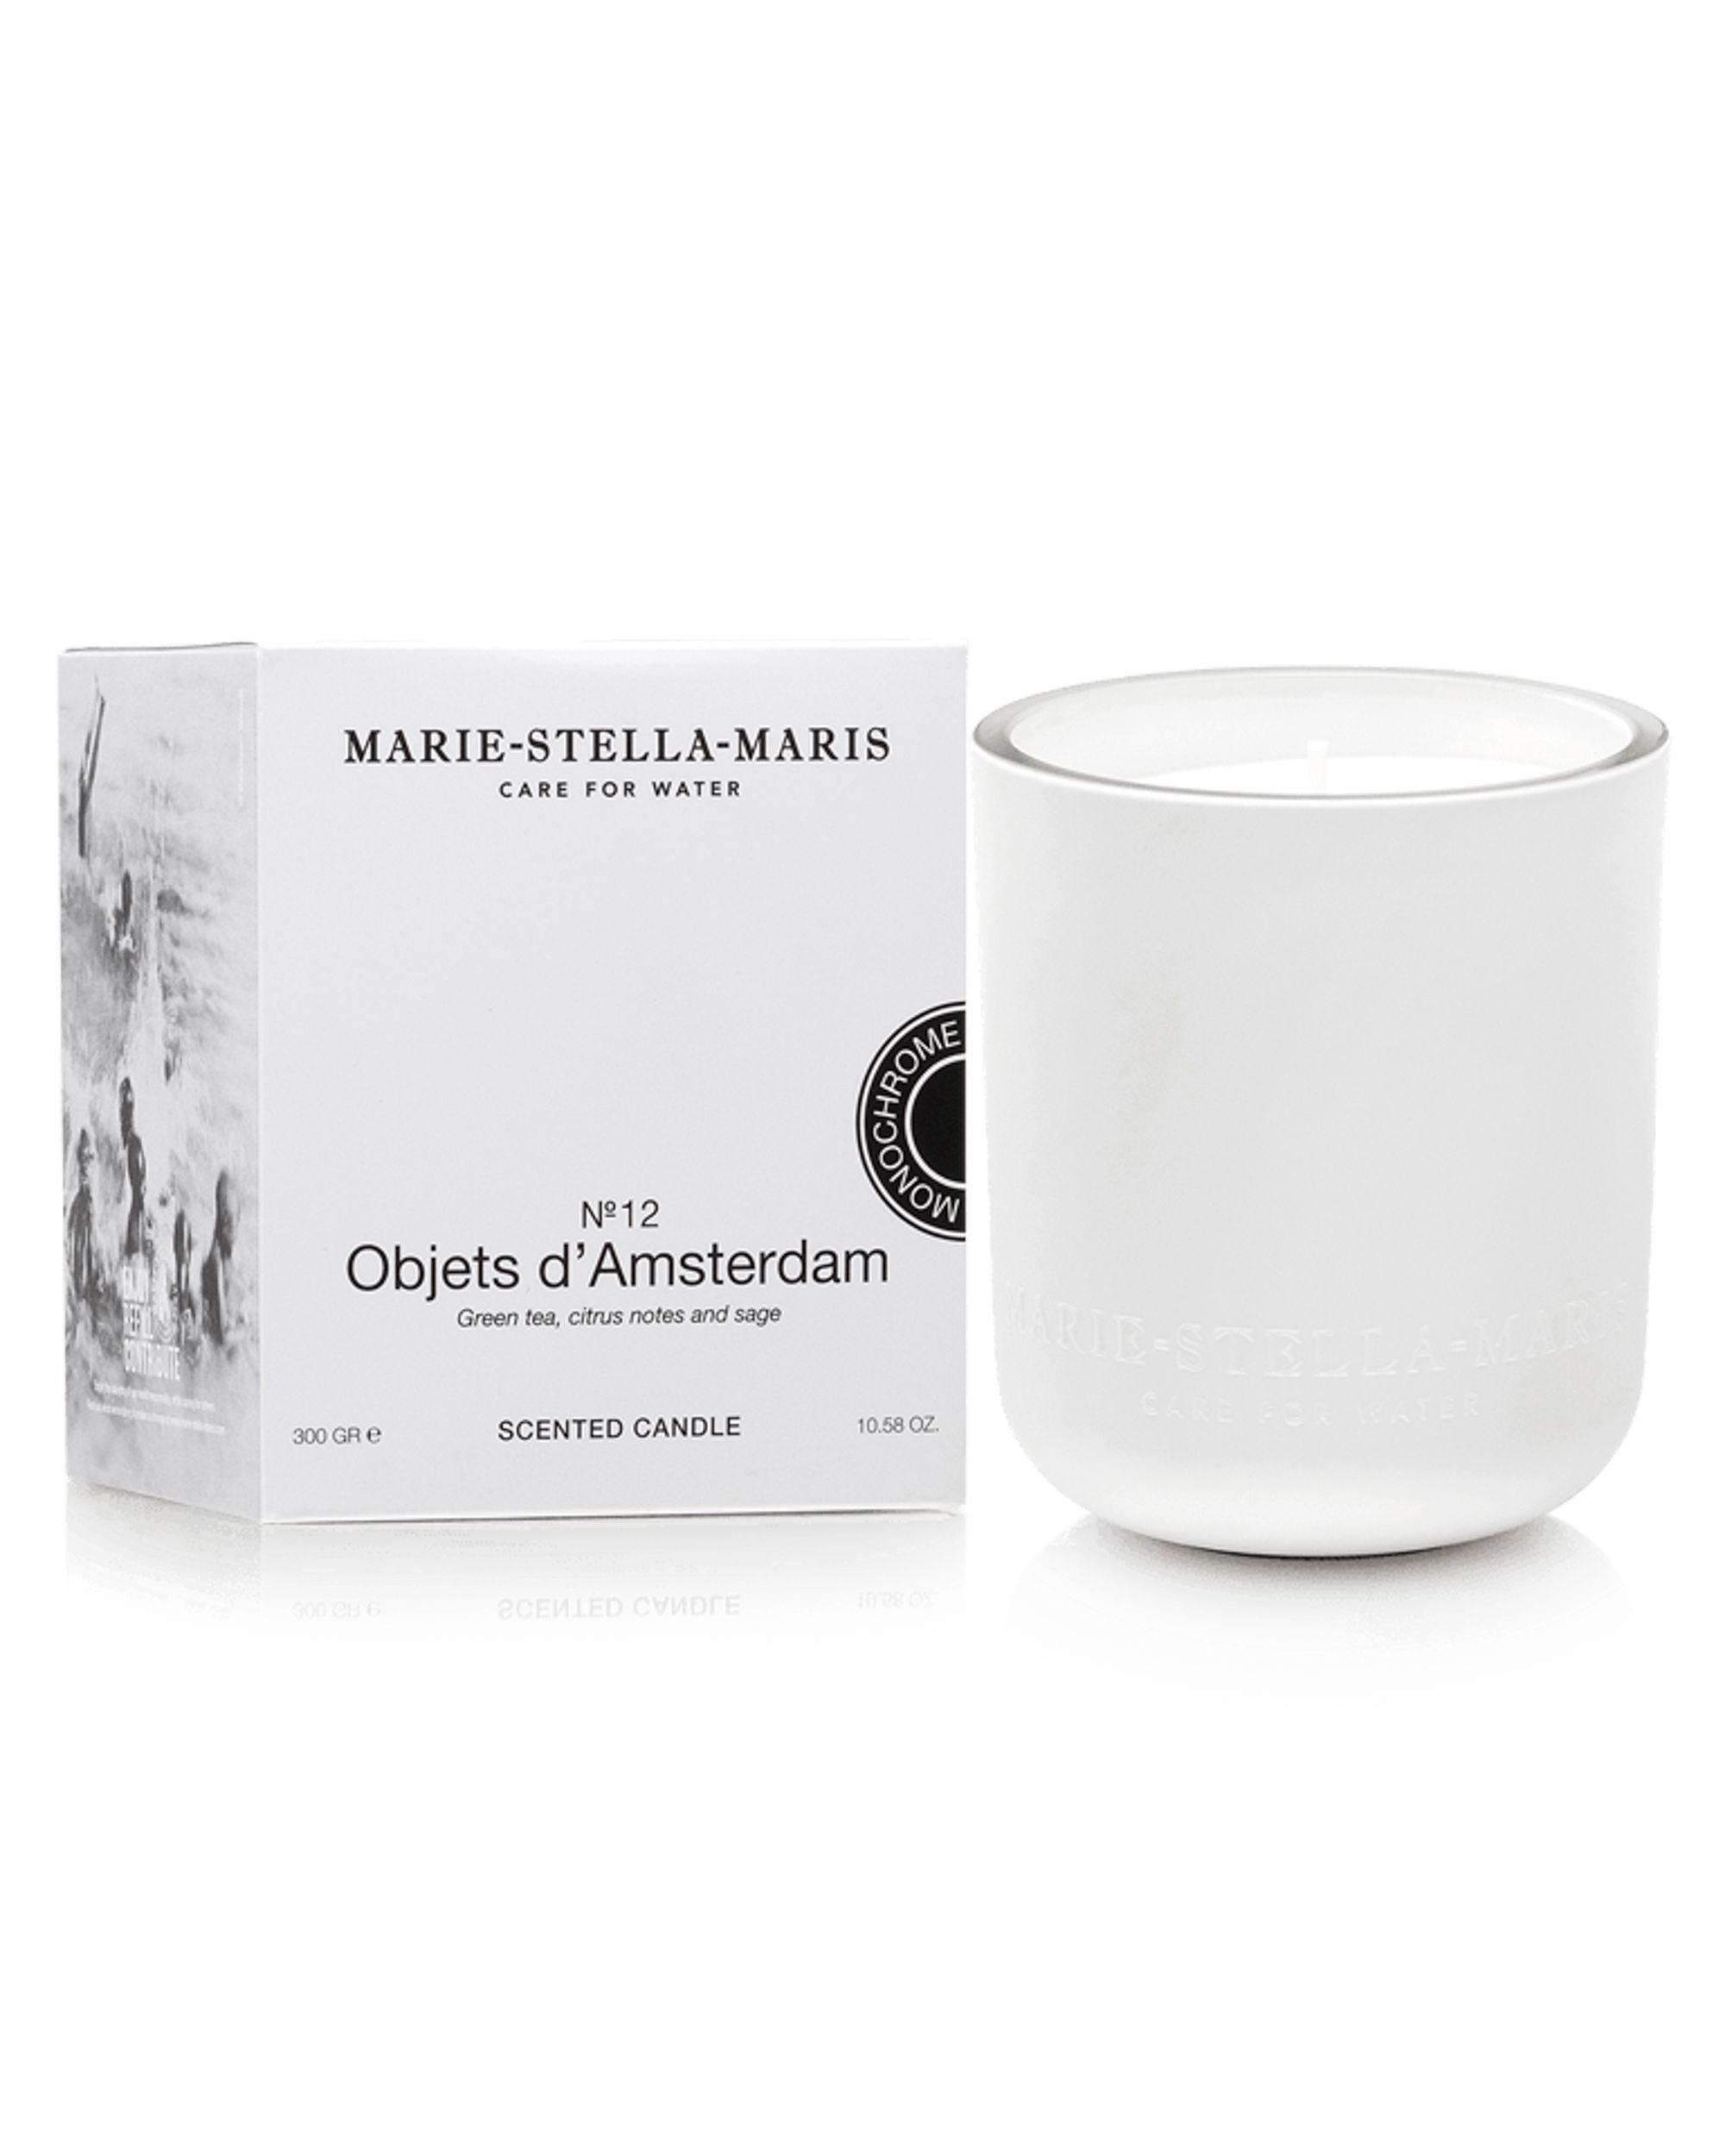 Marie-Stella-Maris Candle Objets d'Amsterdam 300 g NVT 092133-001-220 GR